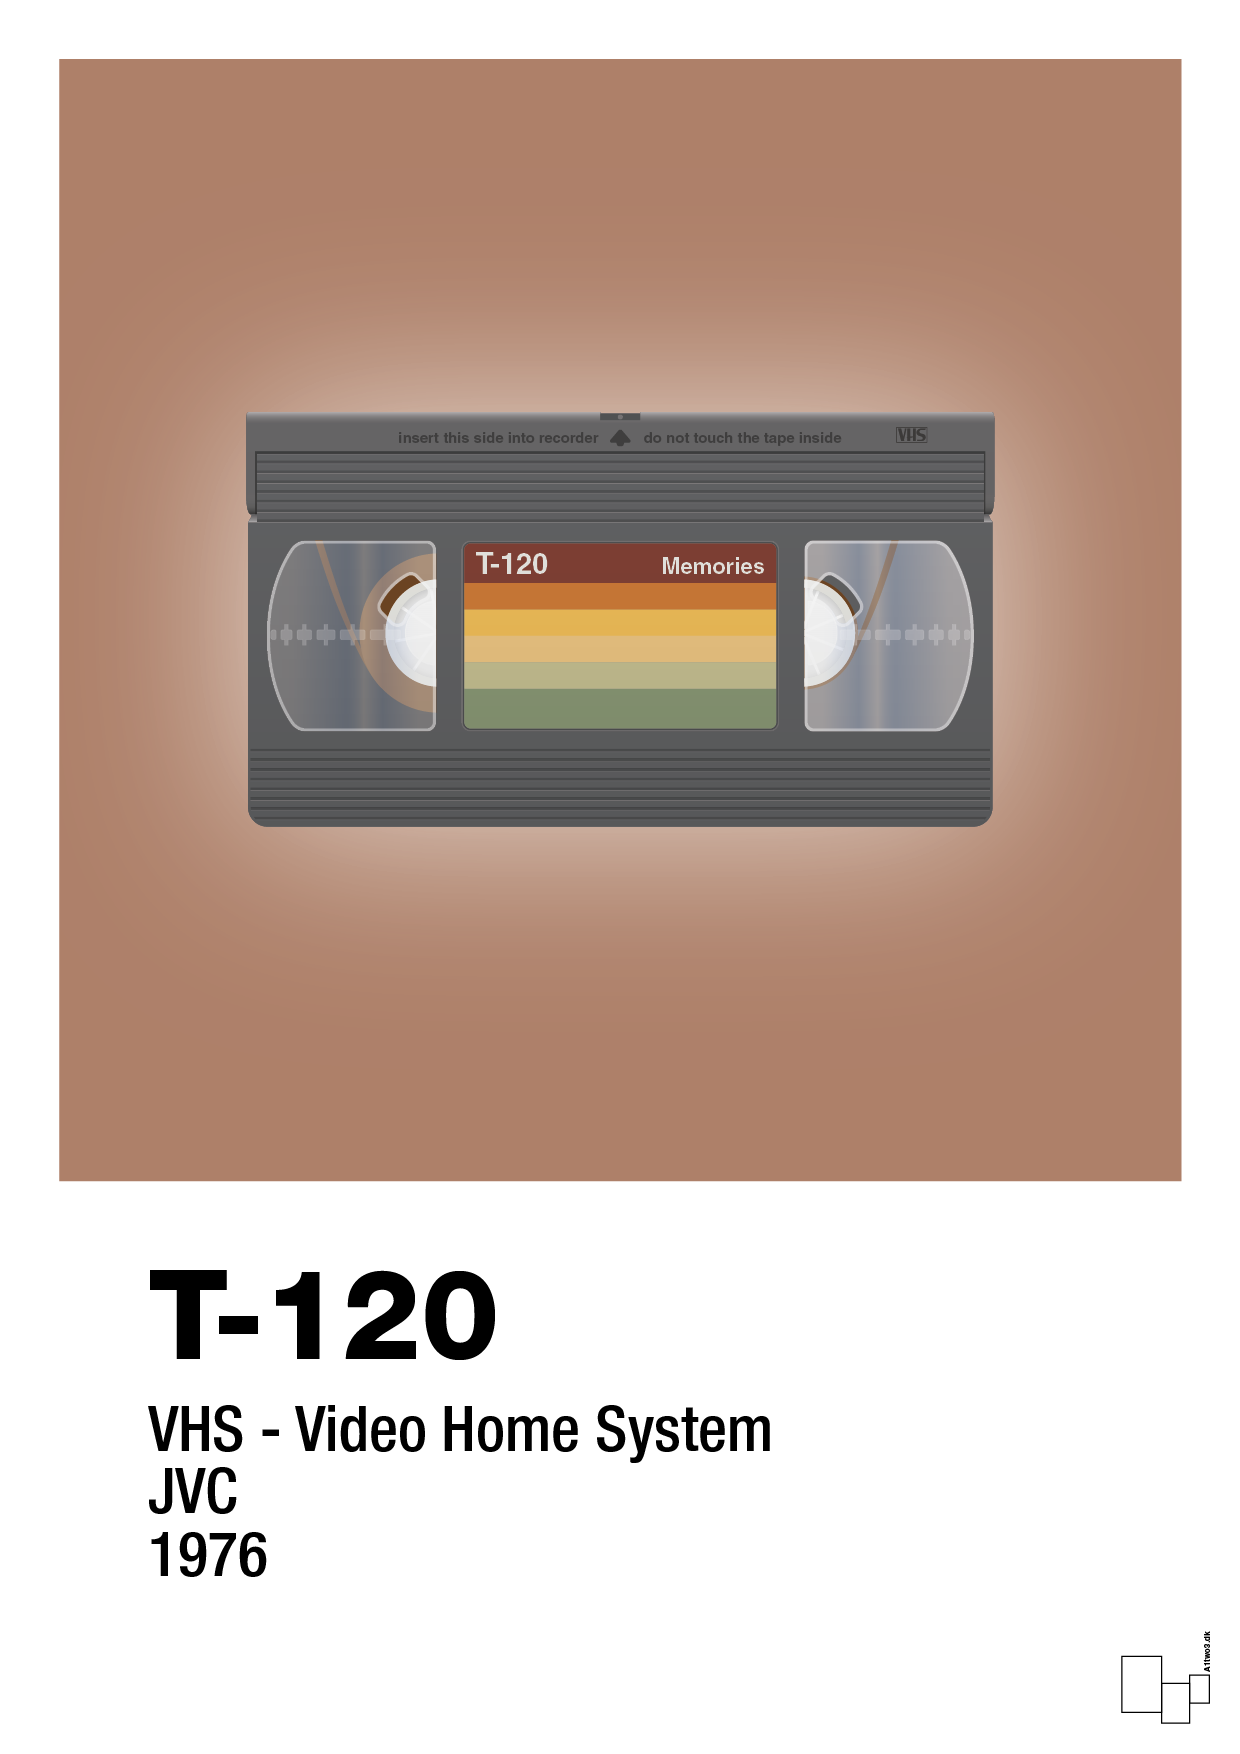 videobånd t-120 - Plakat med Grafik i Cider Spice